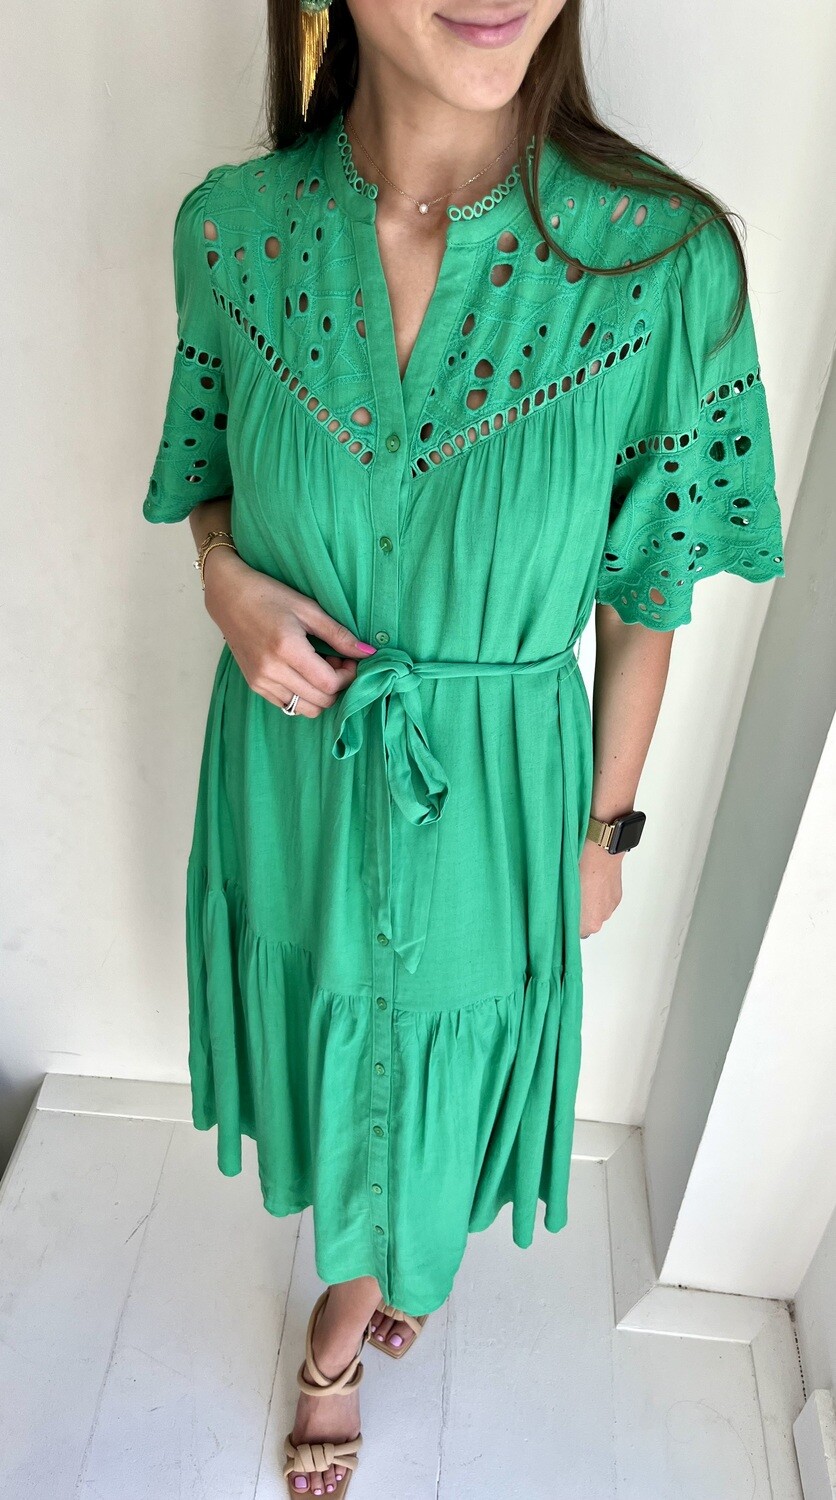 Carlota dress, Color: green, Size: s